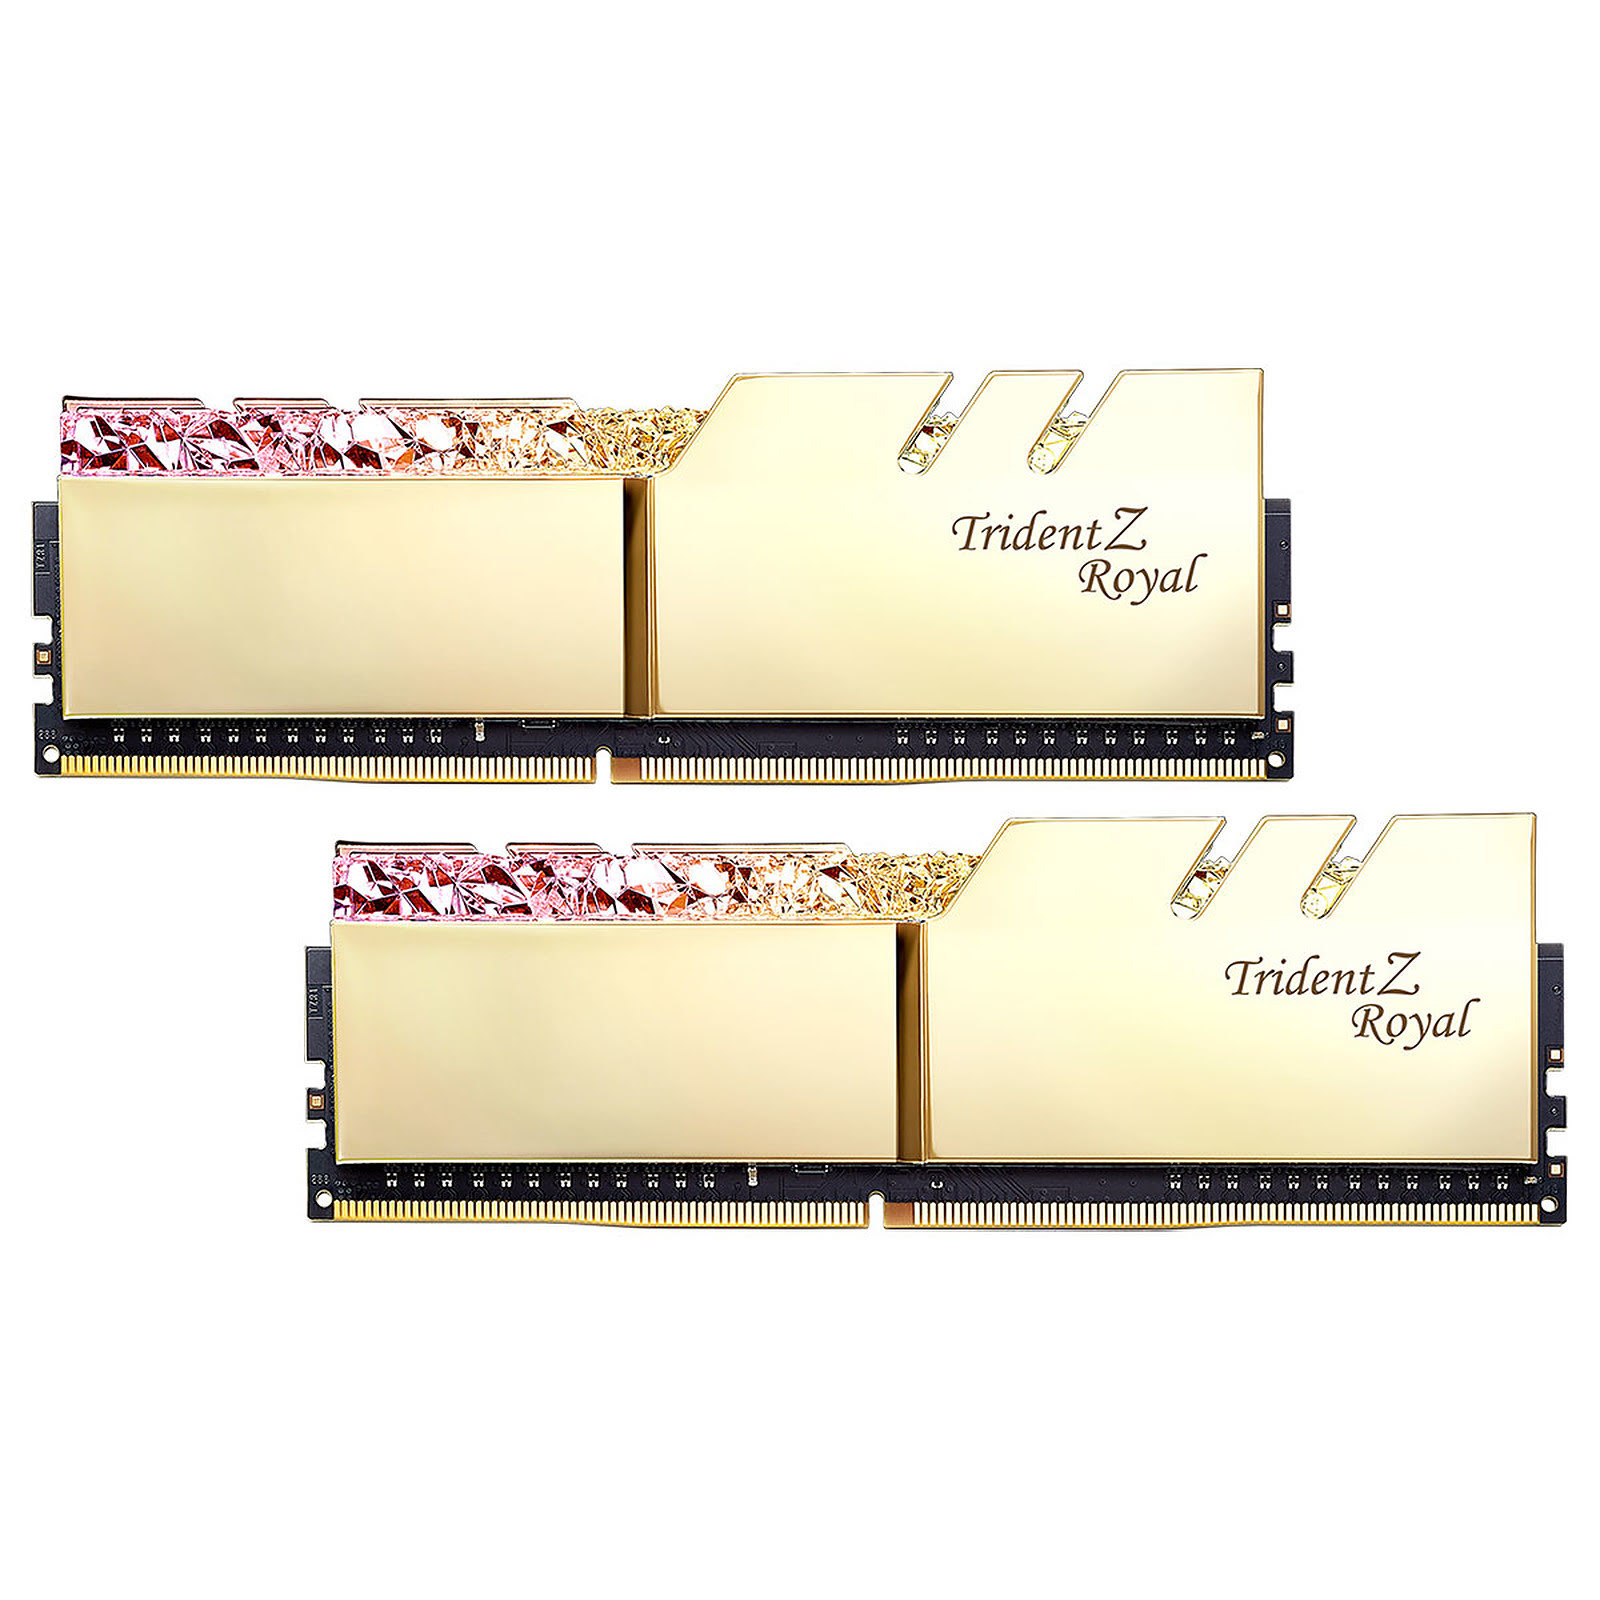 G.Skill Trident Z Royal 16Go (2x8Go) DDR4 3200MHz - Mémoire PC G.Skill sur grosbill-pro.com - 0